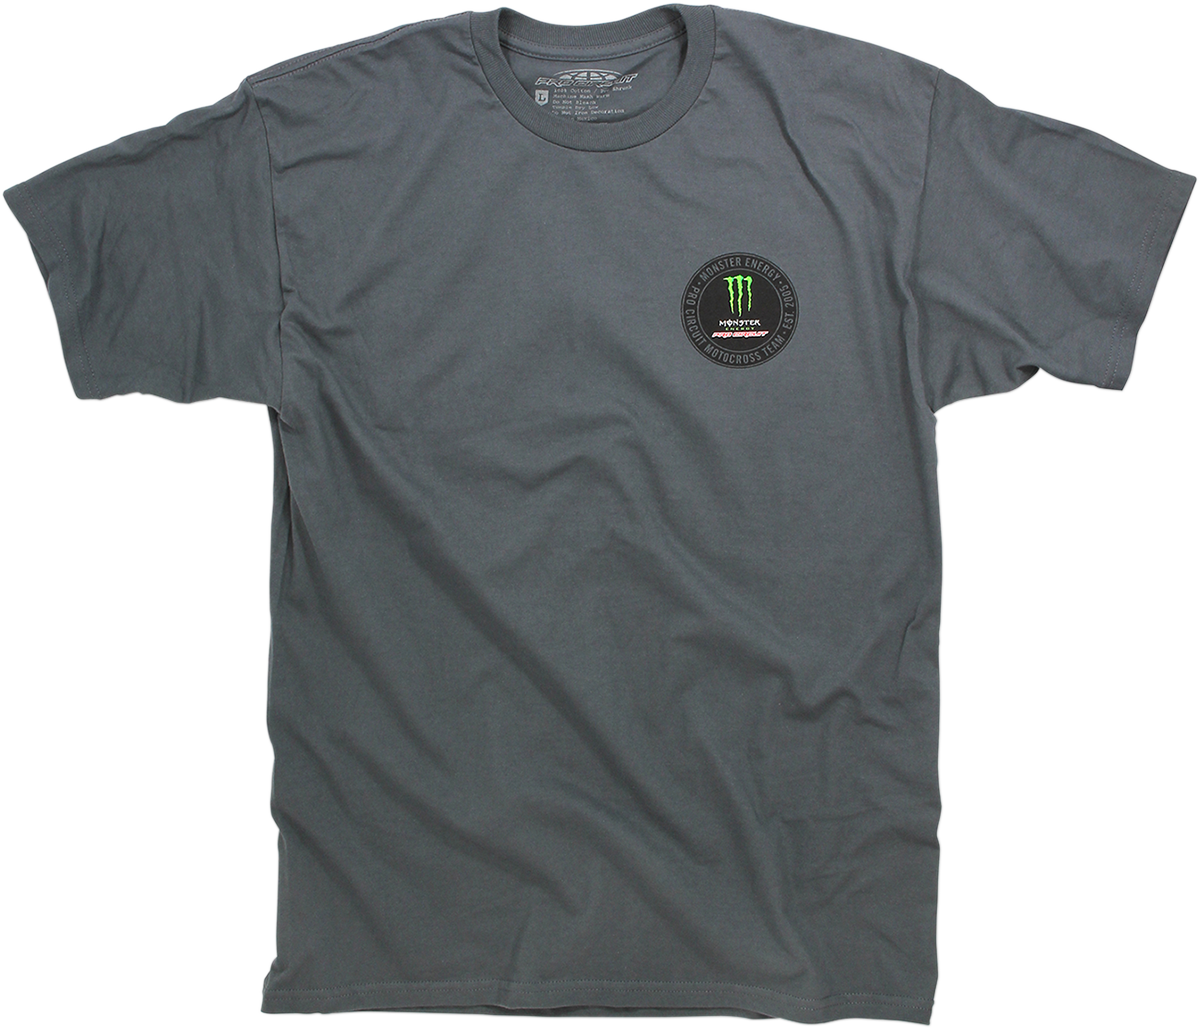 PRO CIRCUIT Patch T-Shirt - Gray - 2XL 6411560-050